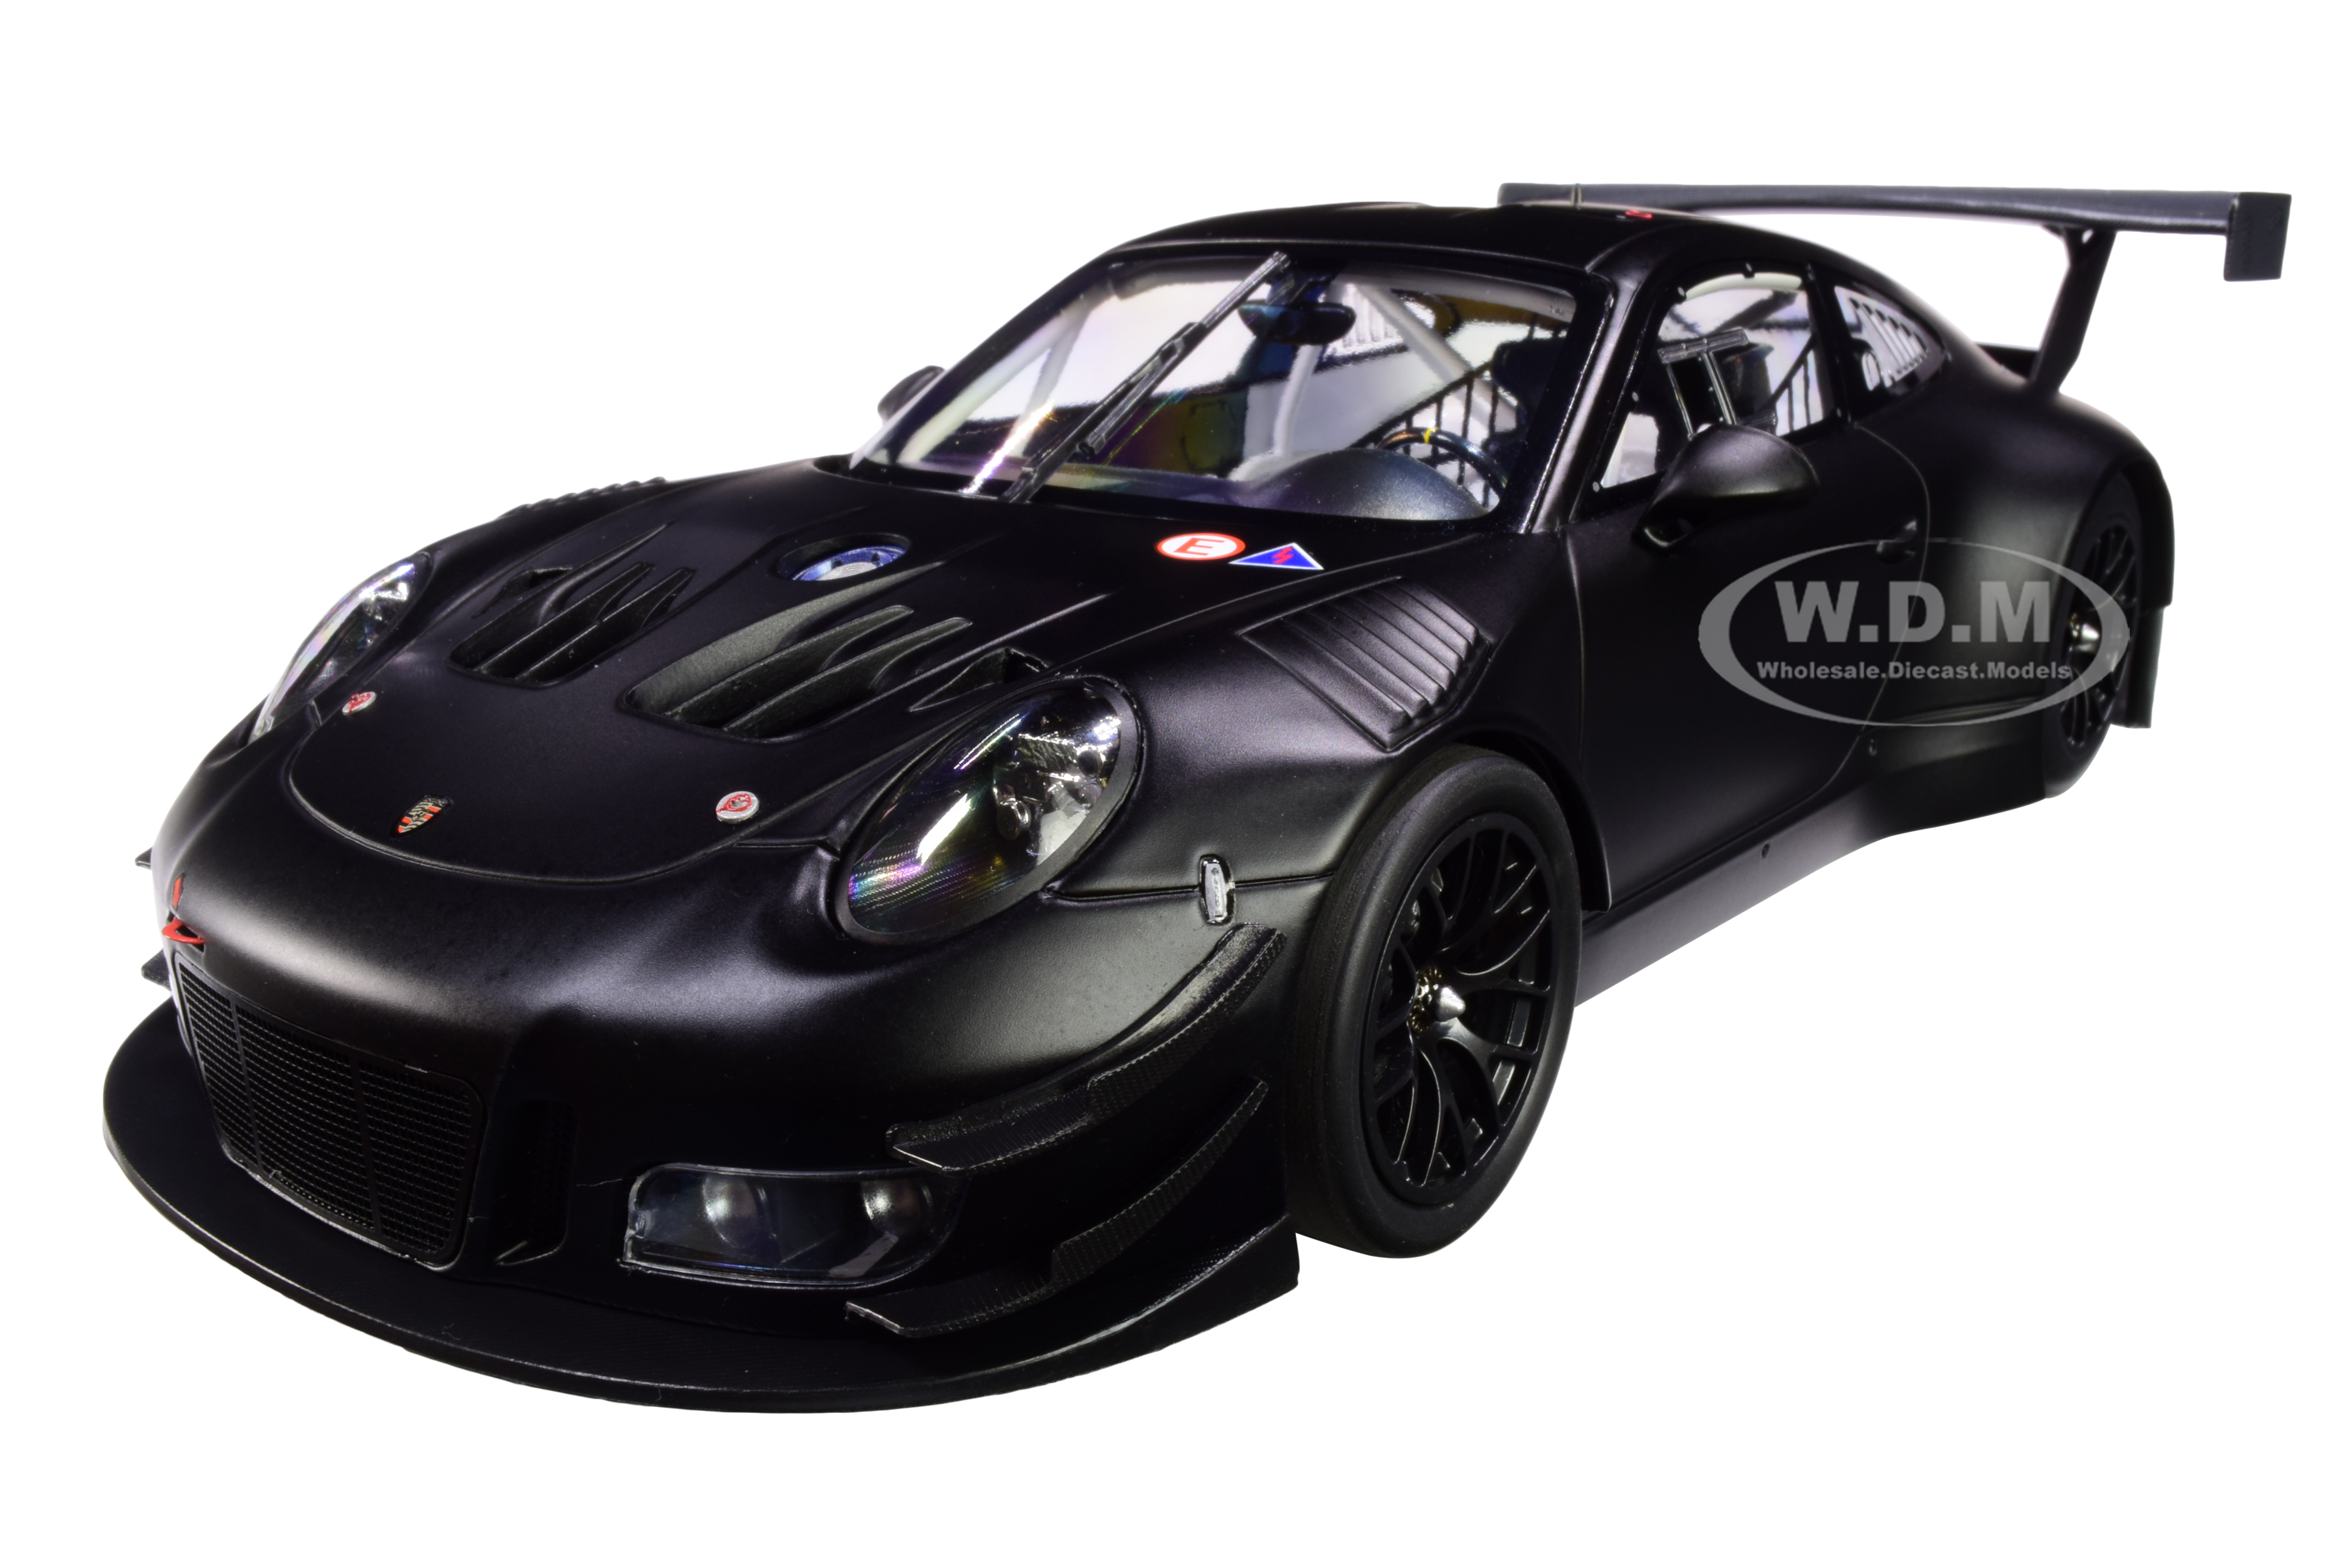 2018 Porsche 911 Gt3 R Matt Black Limited Edition To 300 Pieces Worldwide 1/18 Diecast Model Car By Minichamps